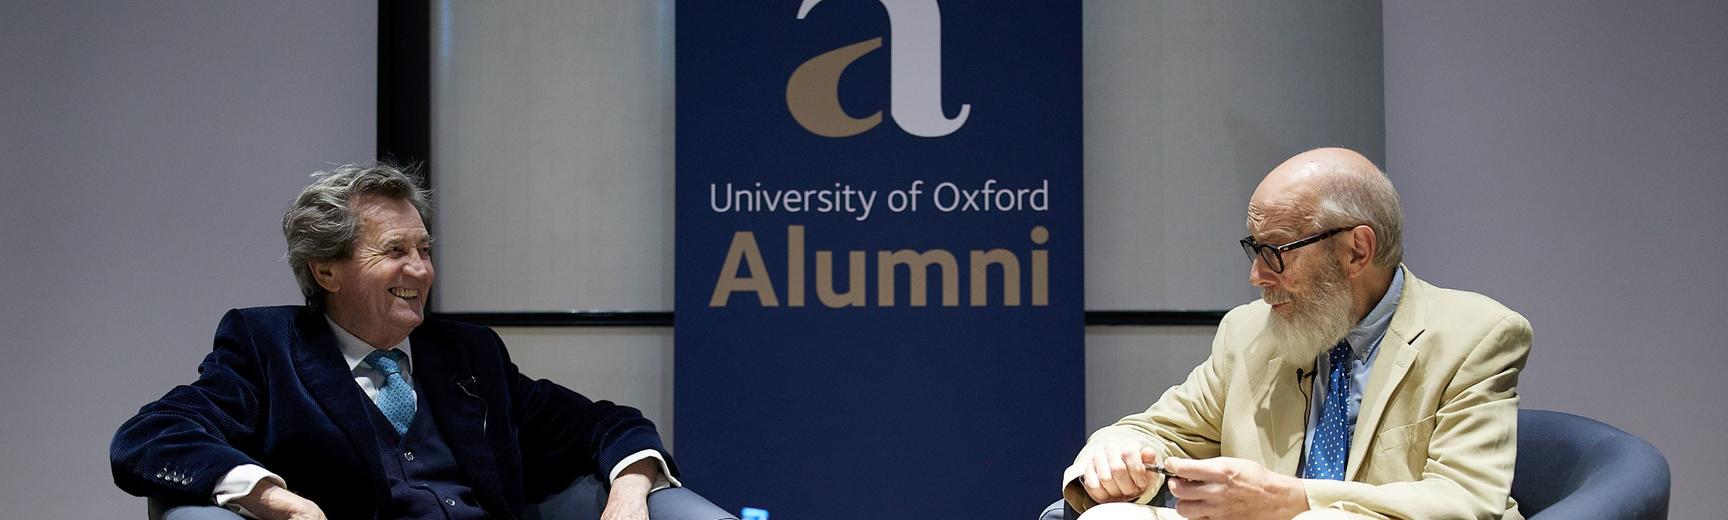 Melvyn Bragg being interviewed at an alumni event